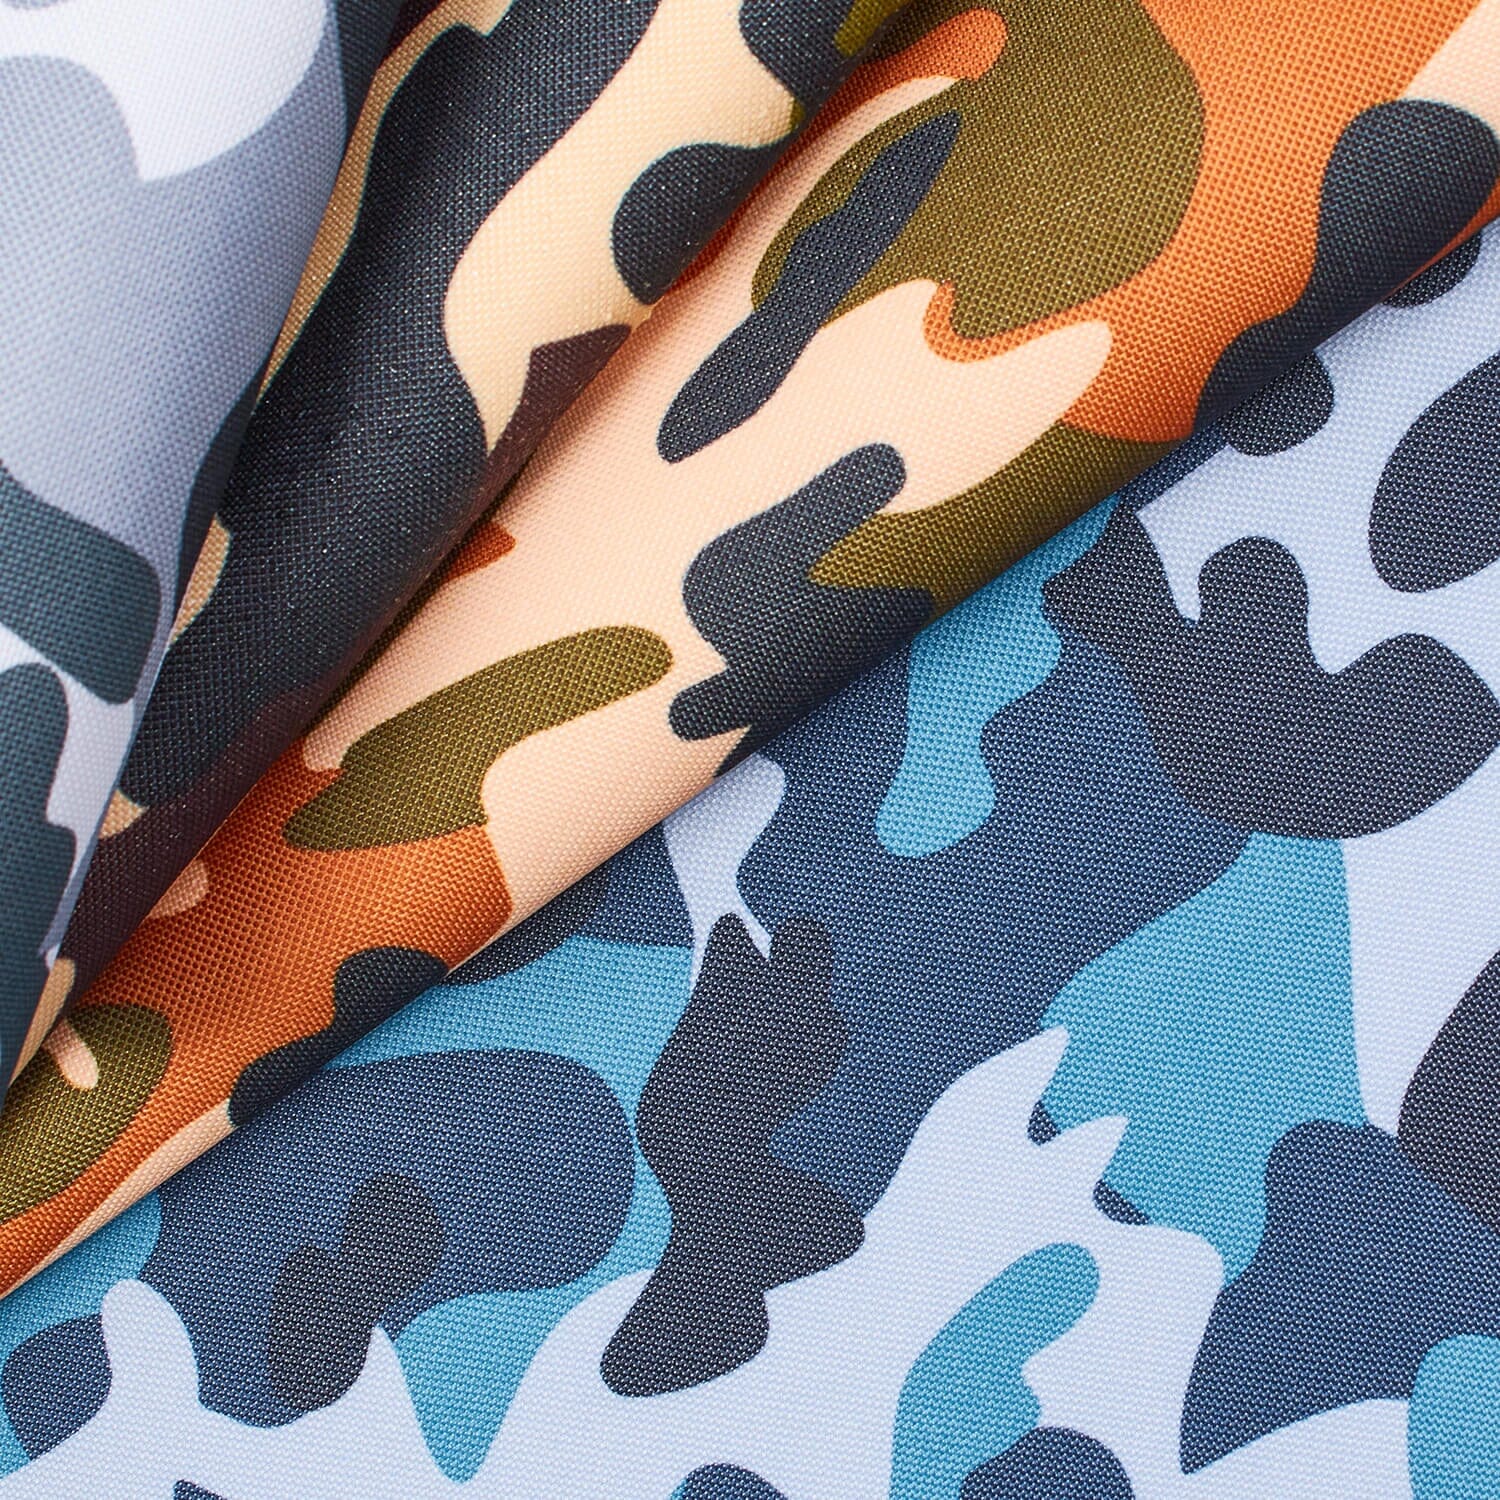 Ottertex Waterproof Military Printed Canvas Fabric